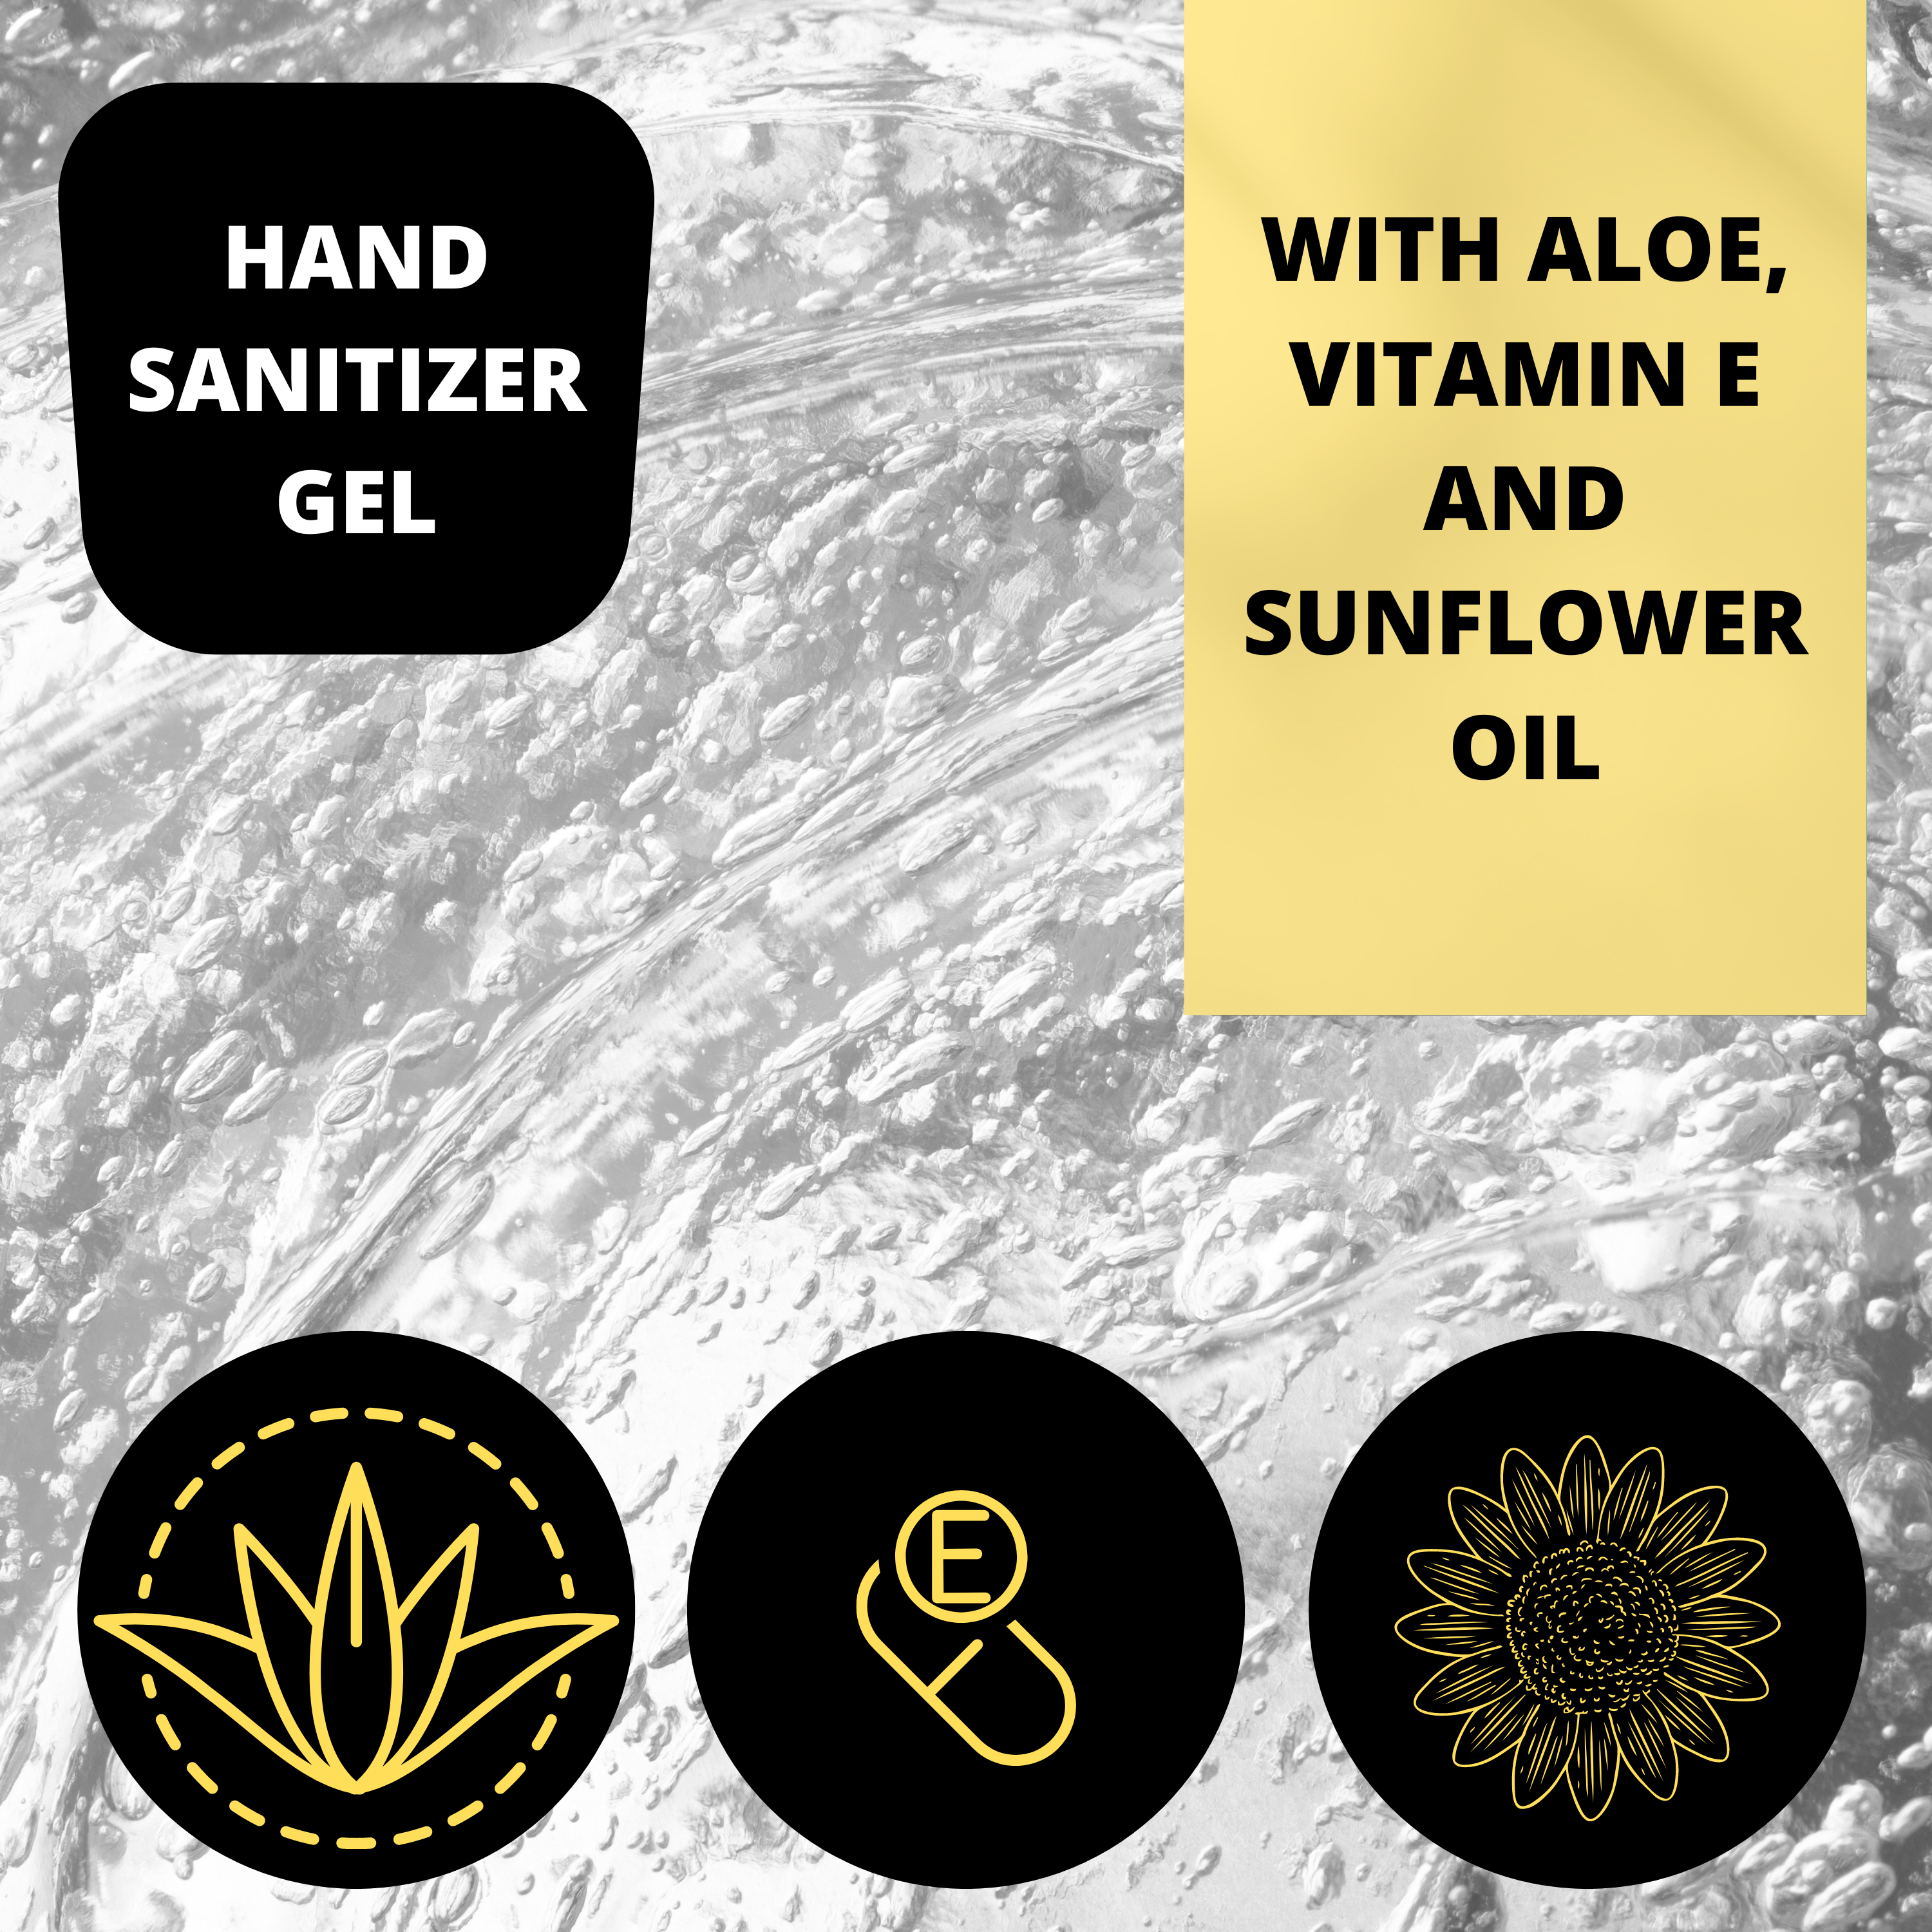 Black Canyon Buttered Popcorn Scented Hand Sanitizer Gel